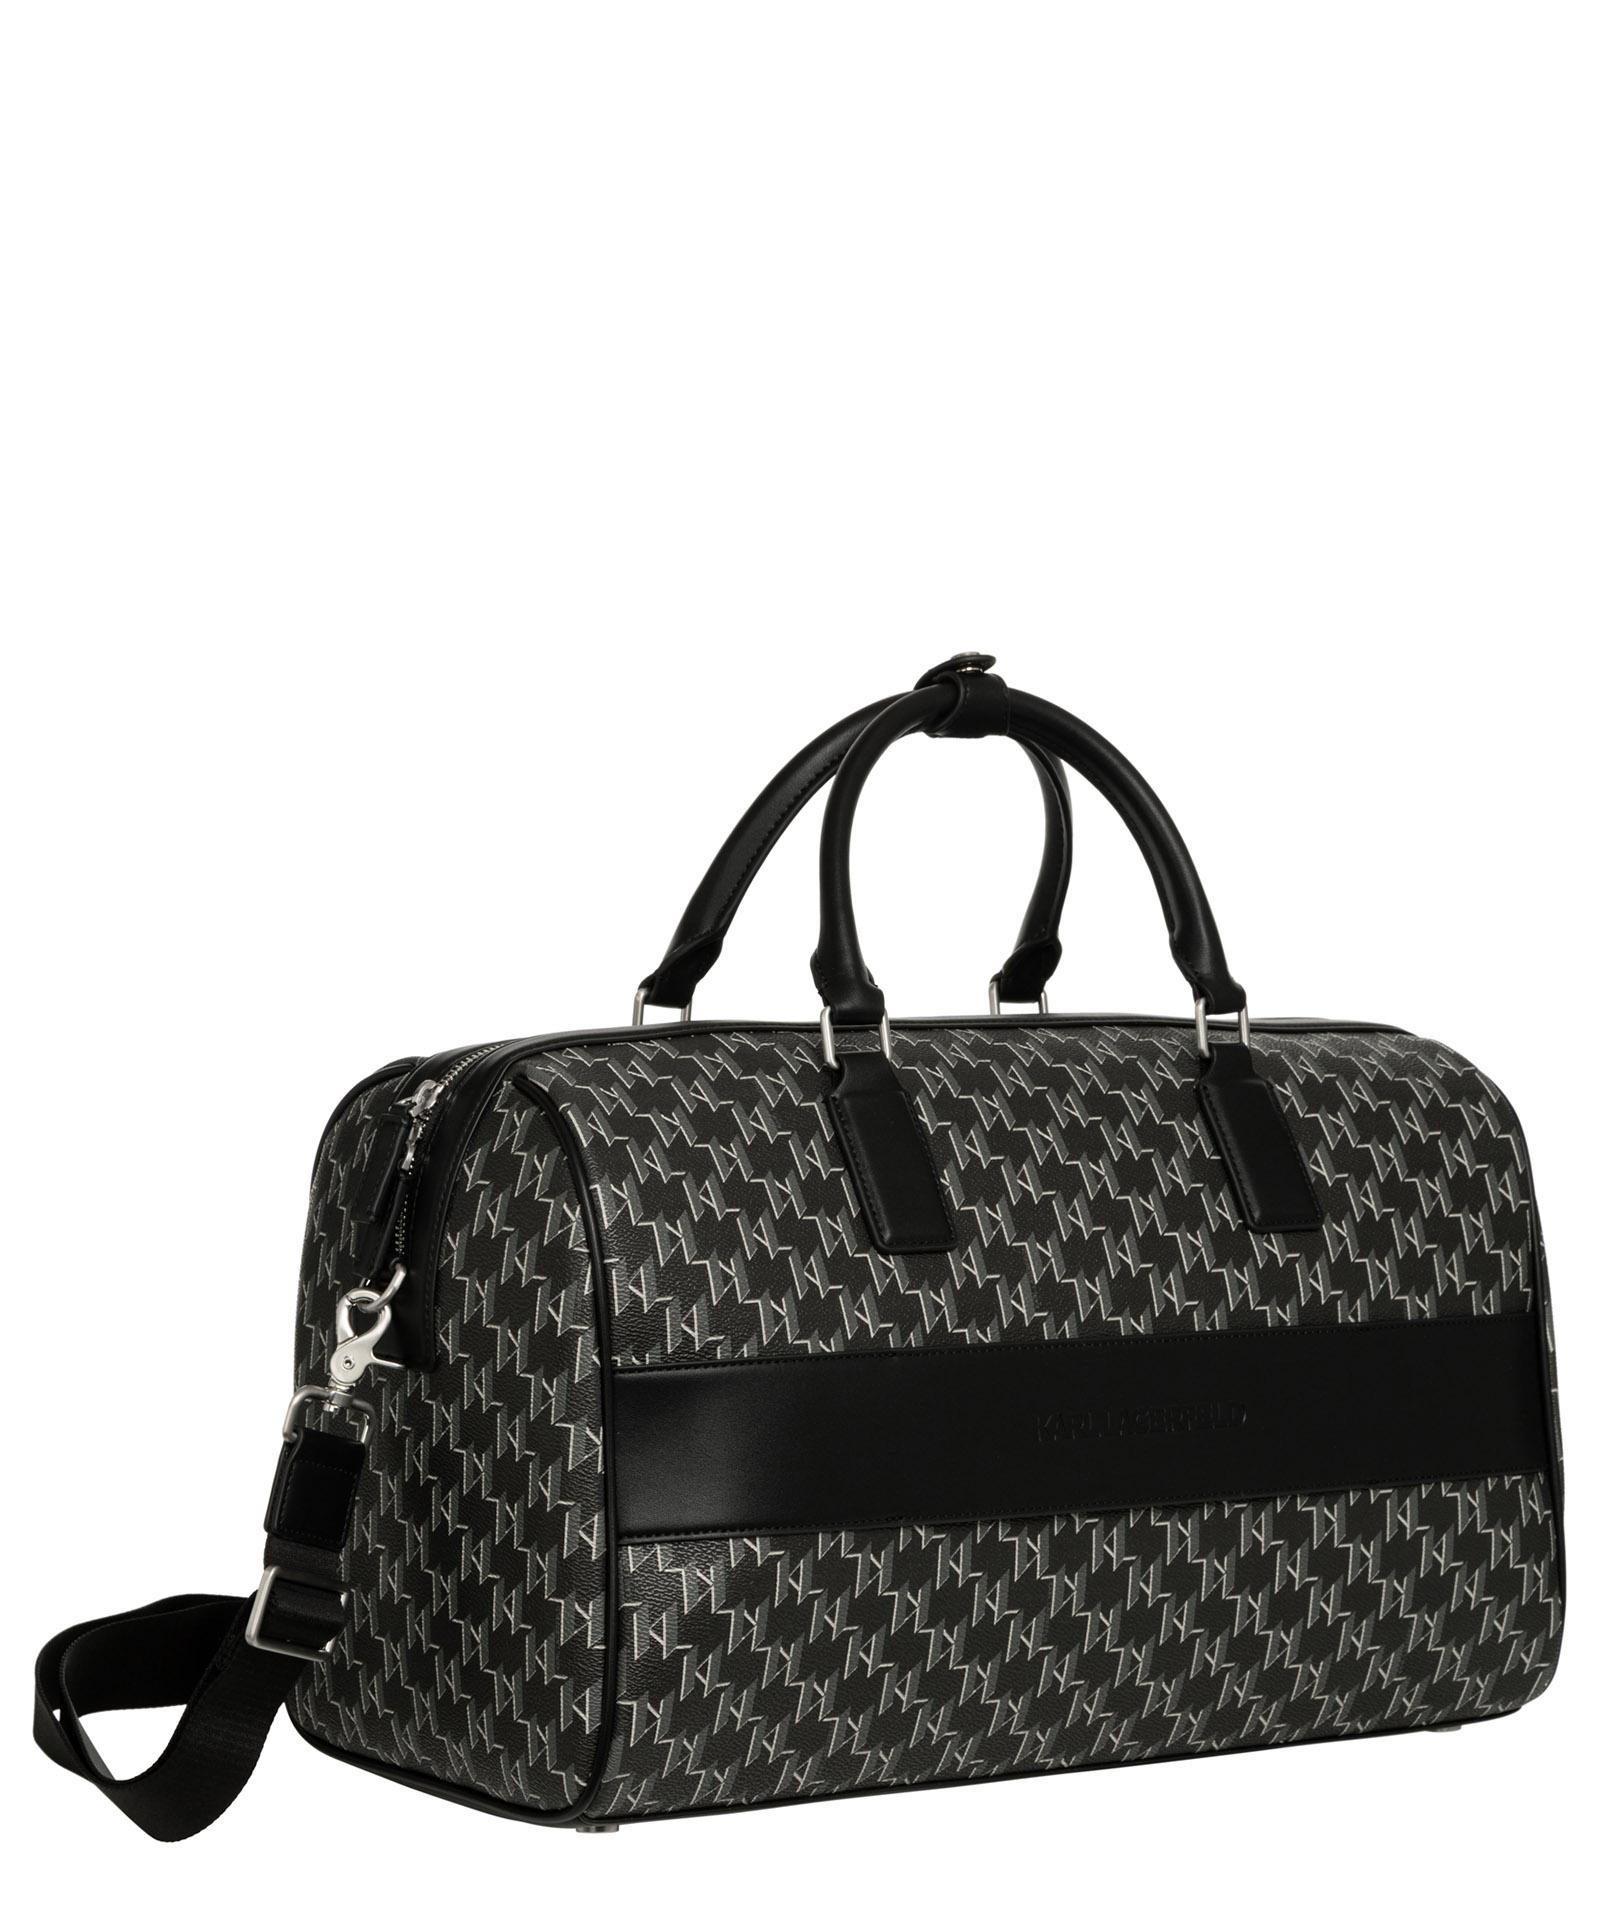 Karl Lagerfeld K/mono Klassik Duffle Bag in Black | Lyst